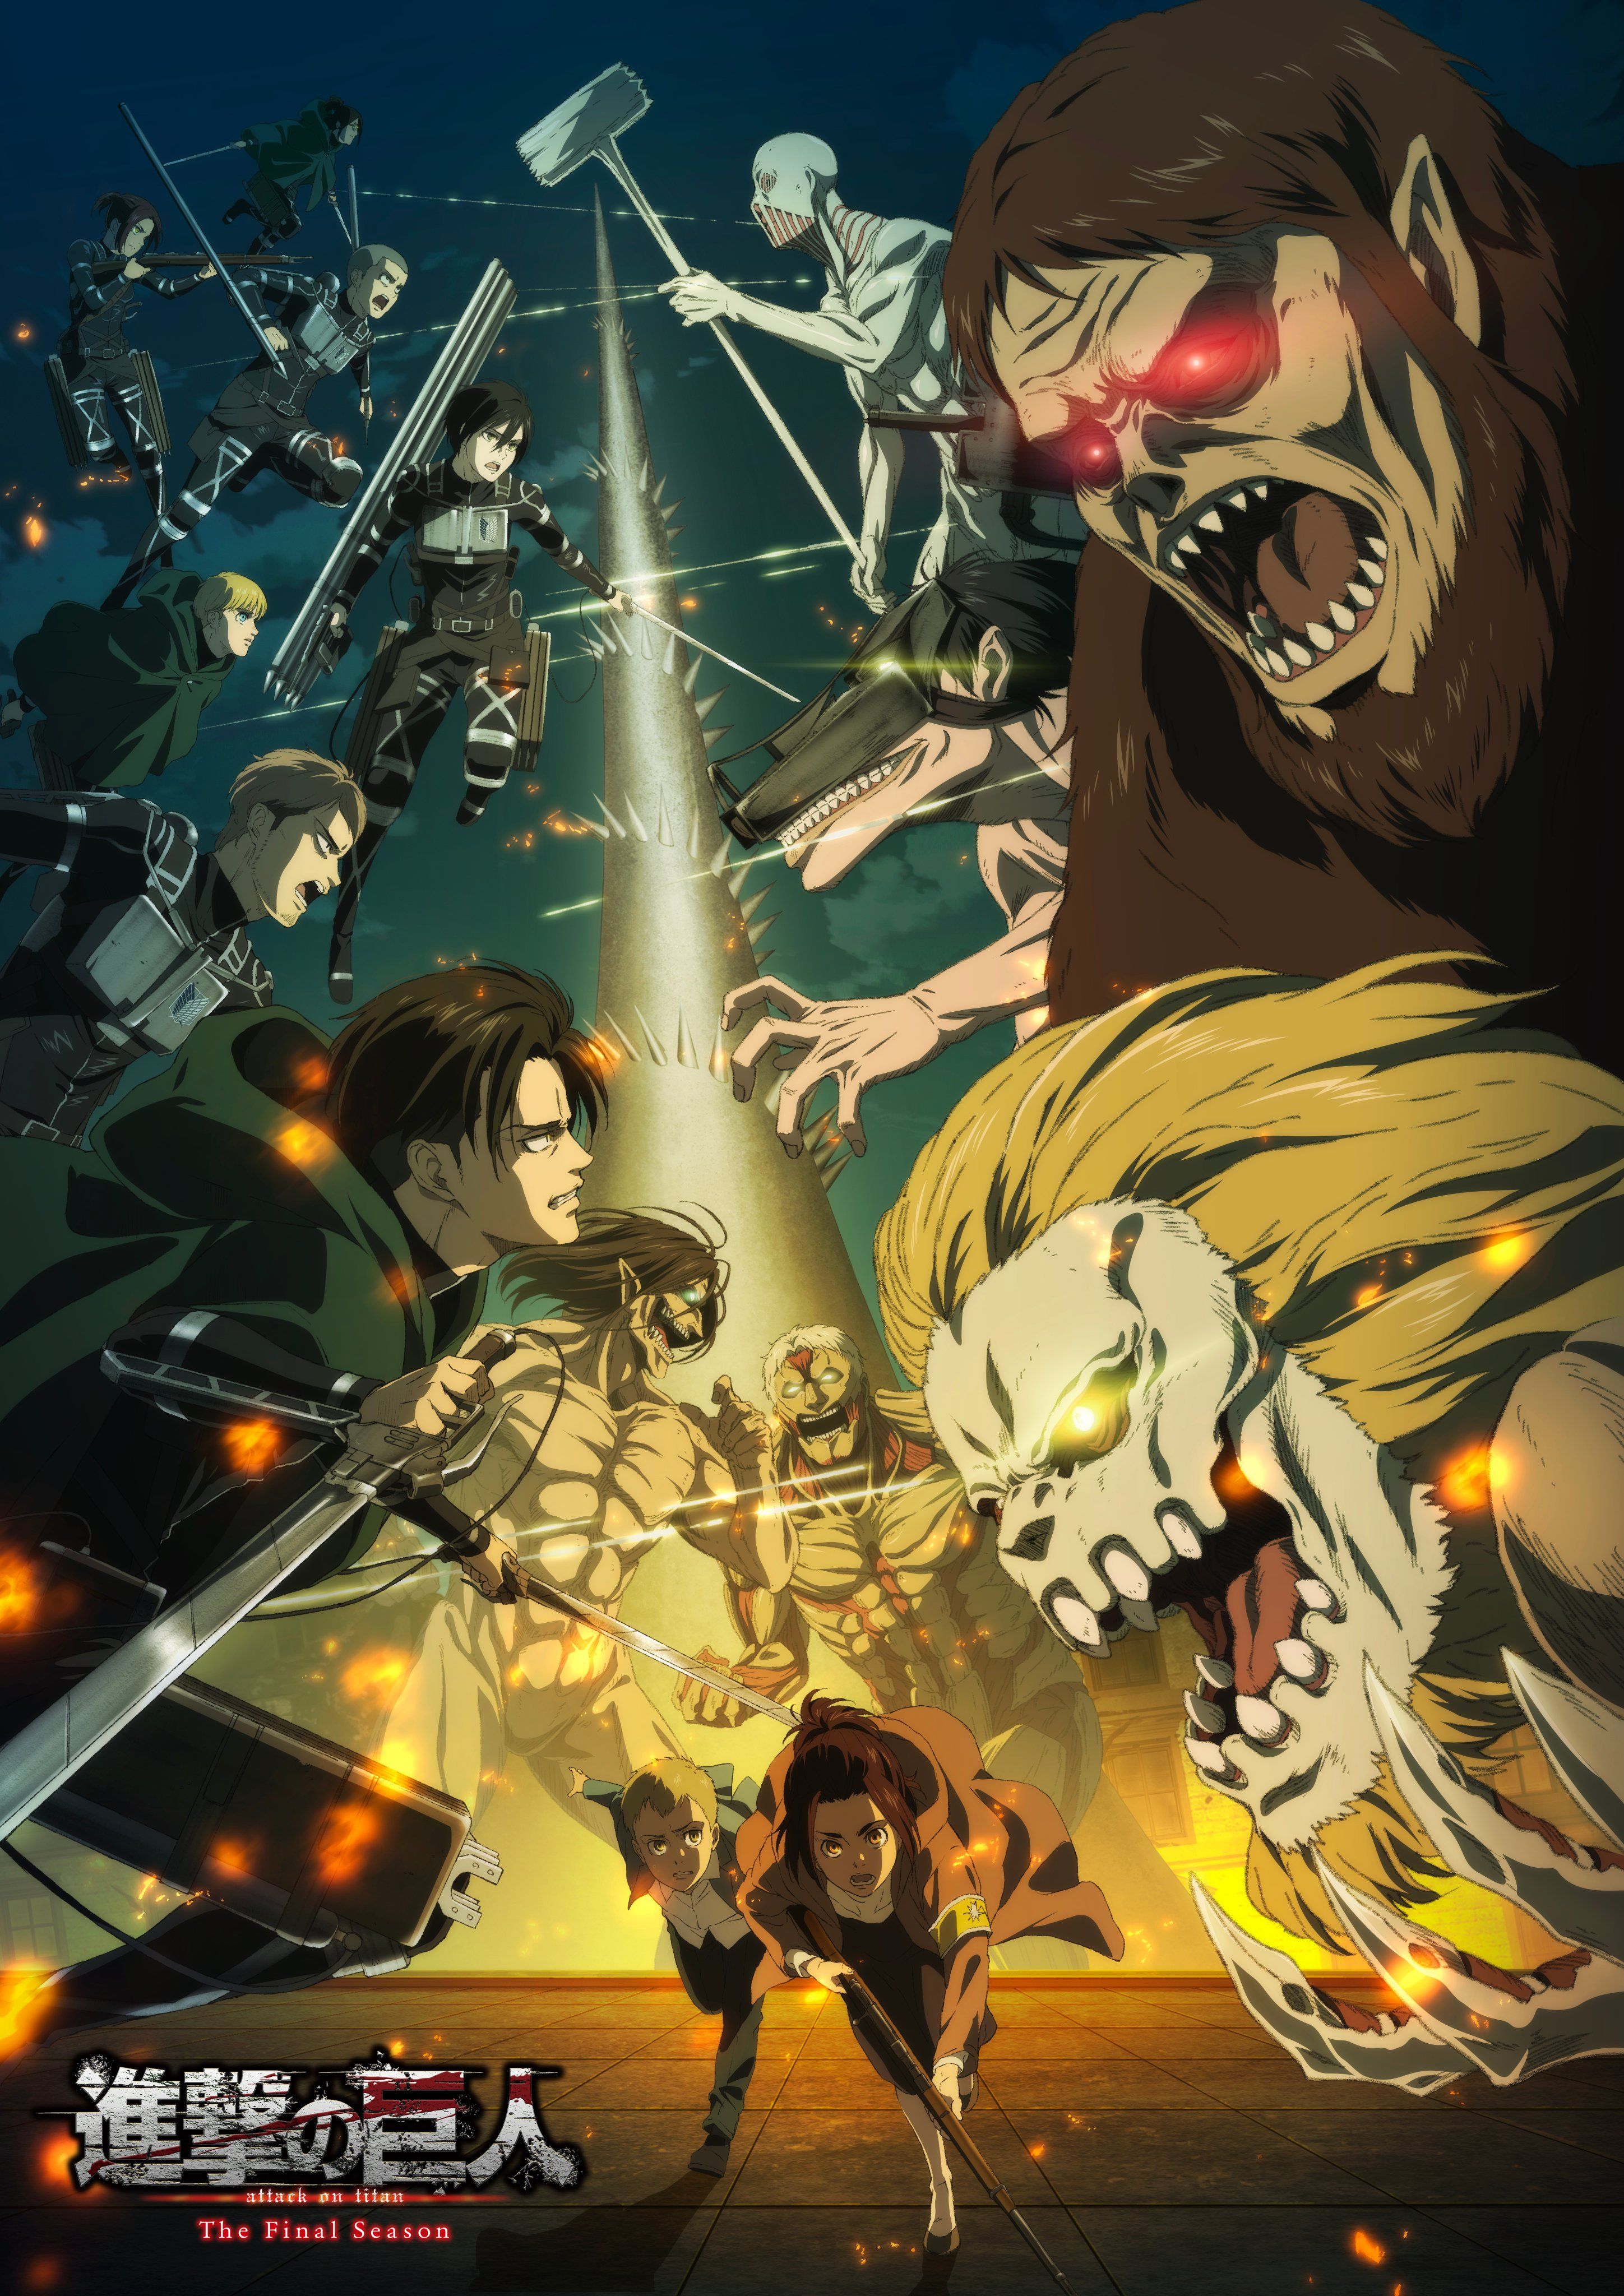 Shingeki no Kyojin: The Final Season (Attack On Titan: The Final Season) Anime Image Board